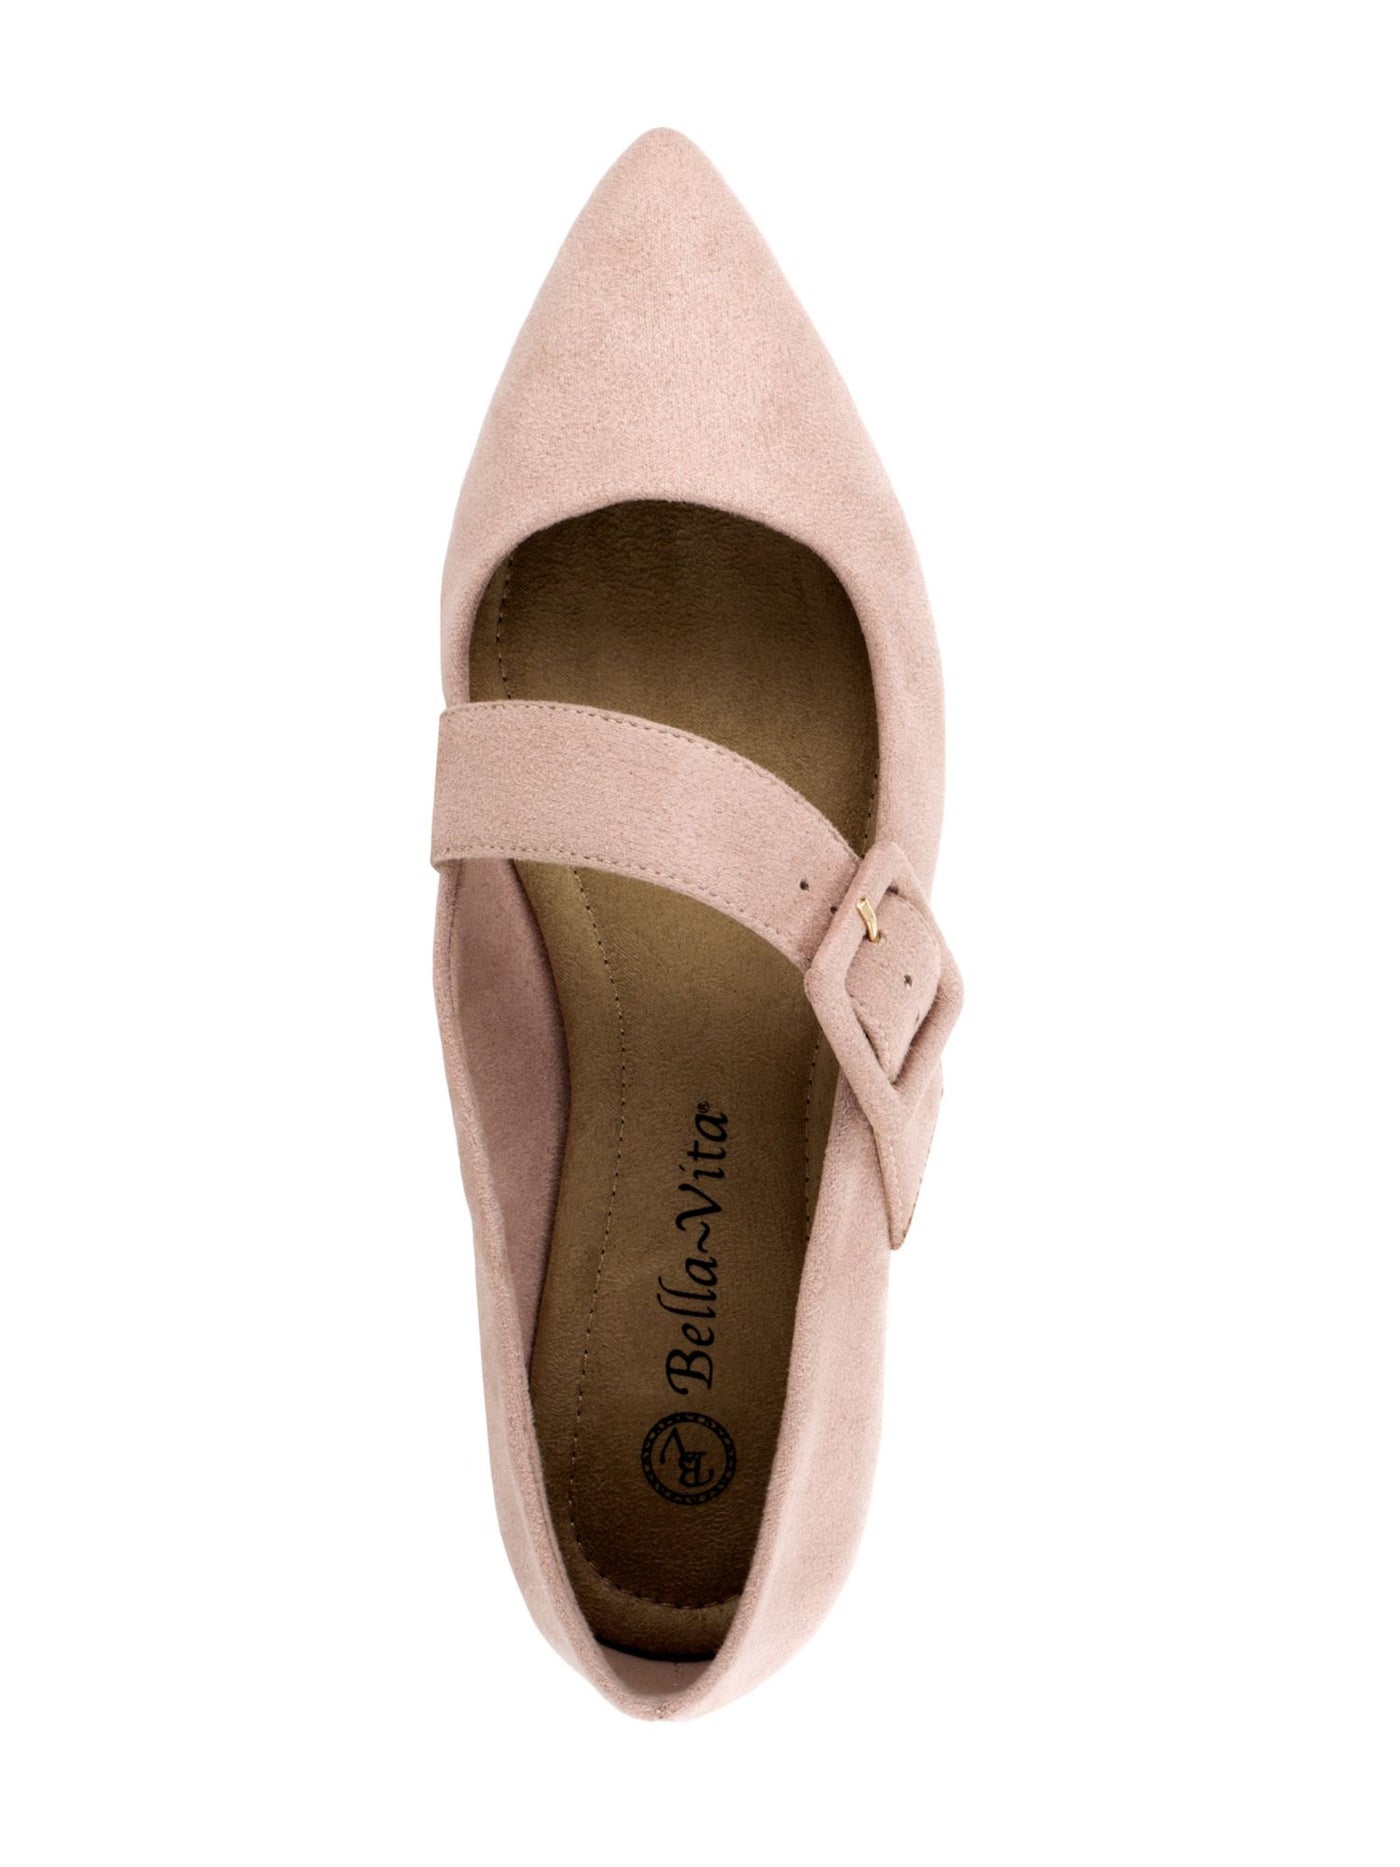 BELLA VITA Womens Pink Padded Asymmetrical Virginia Pointed Toe Buckle Flats Shoes 9 N